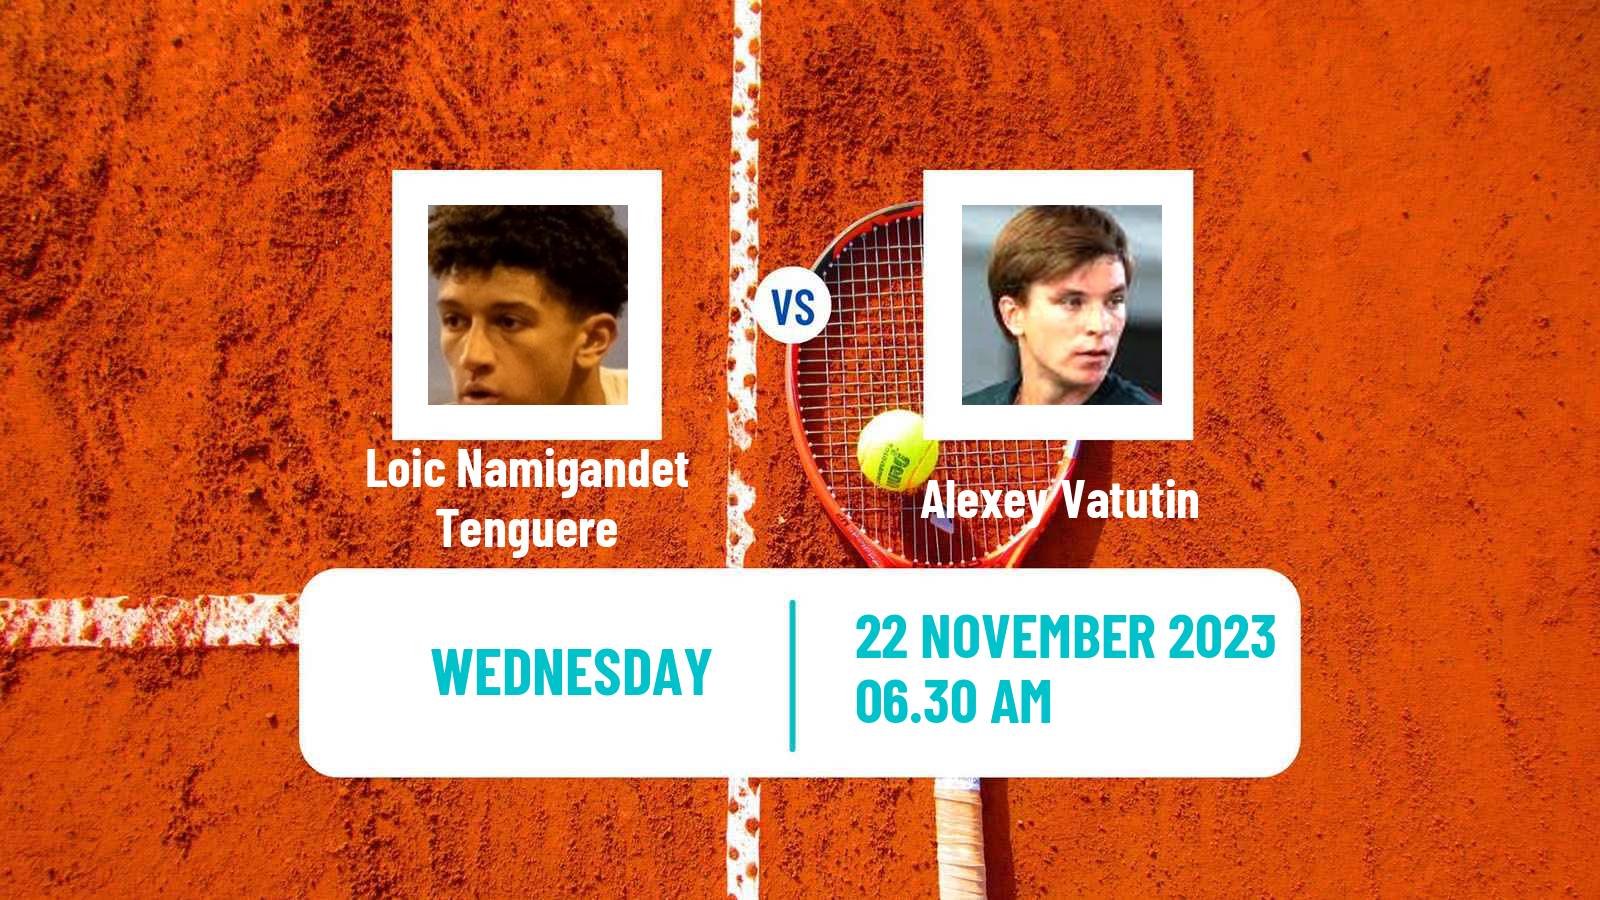 Tennis ITF M25 Vale Do Lobo 2 Men Loic Namigandet Tenguere - Alexey Vatutin